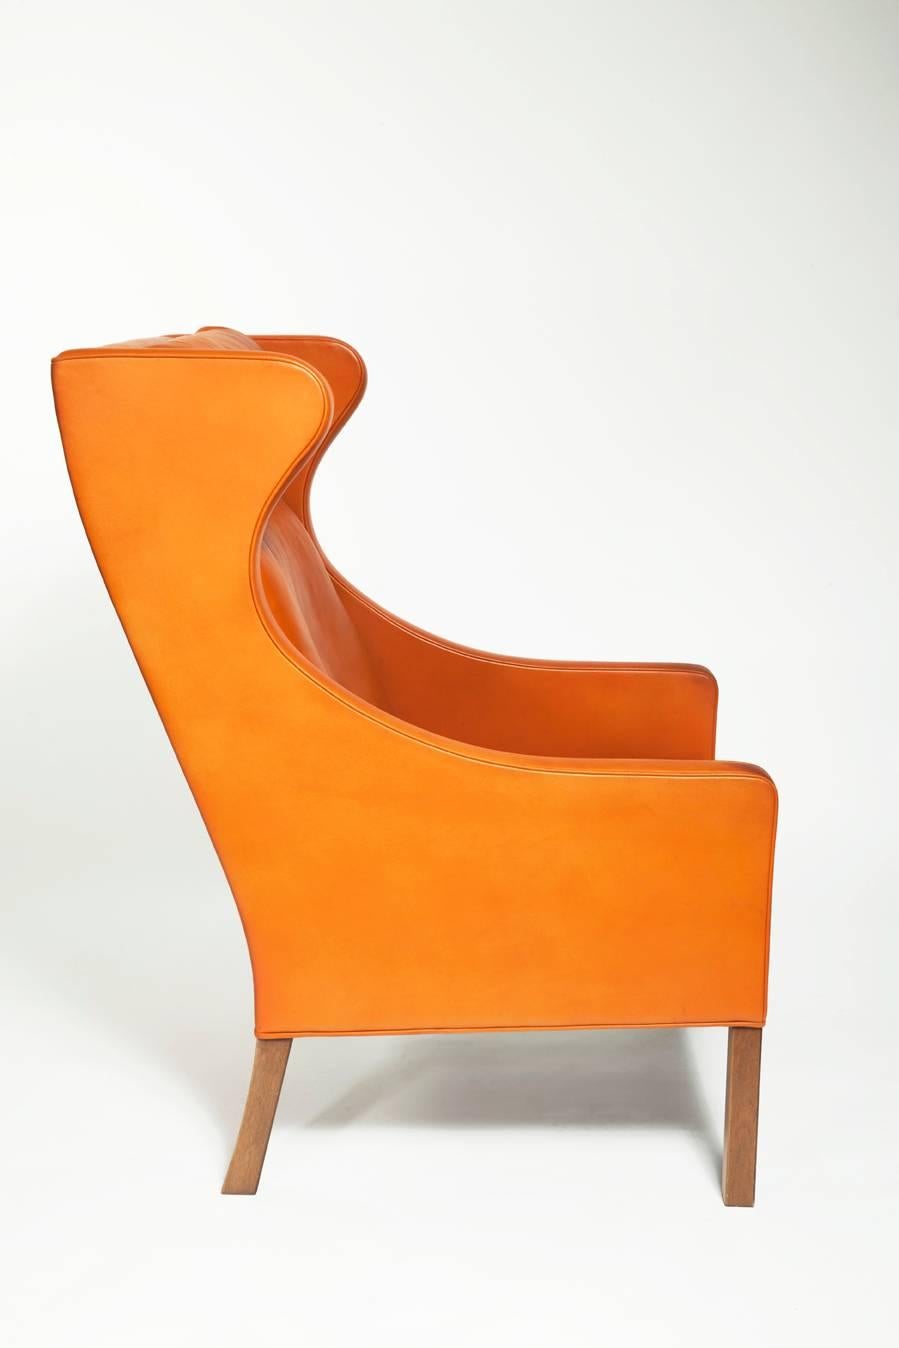 orange leather armchair